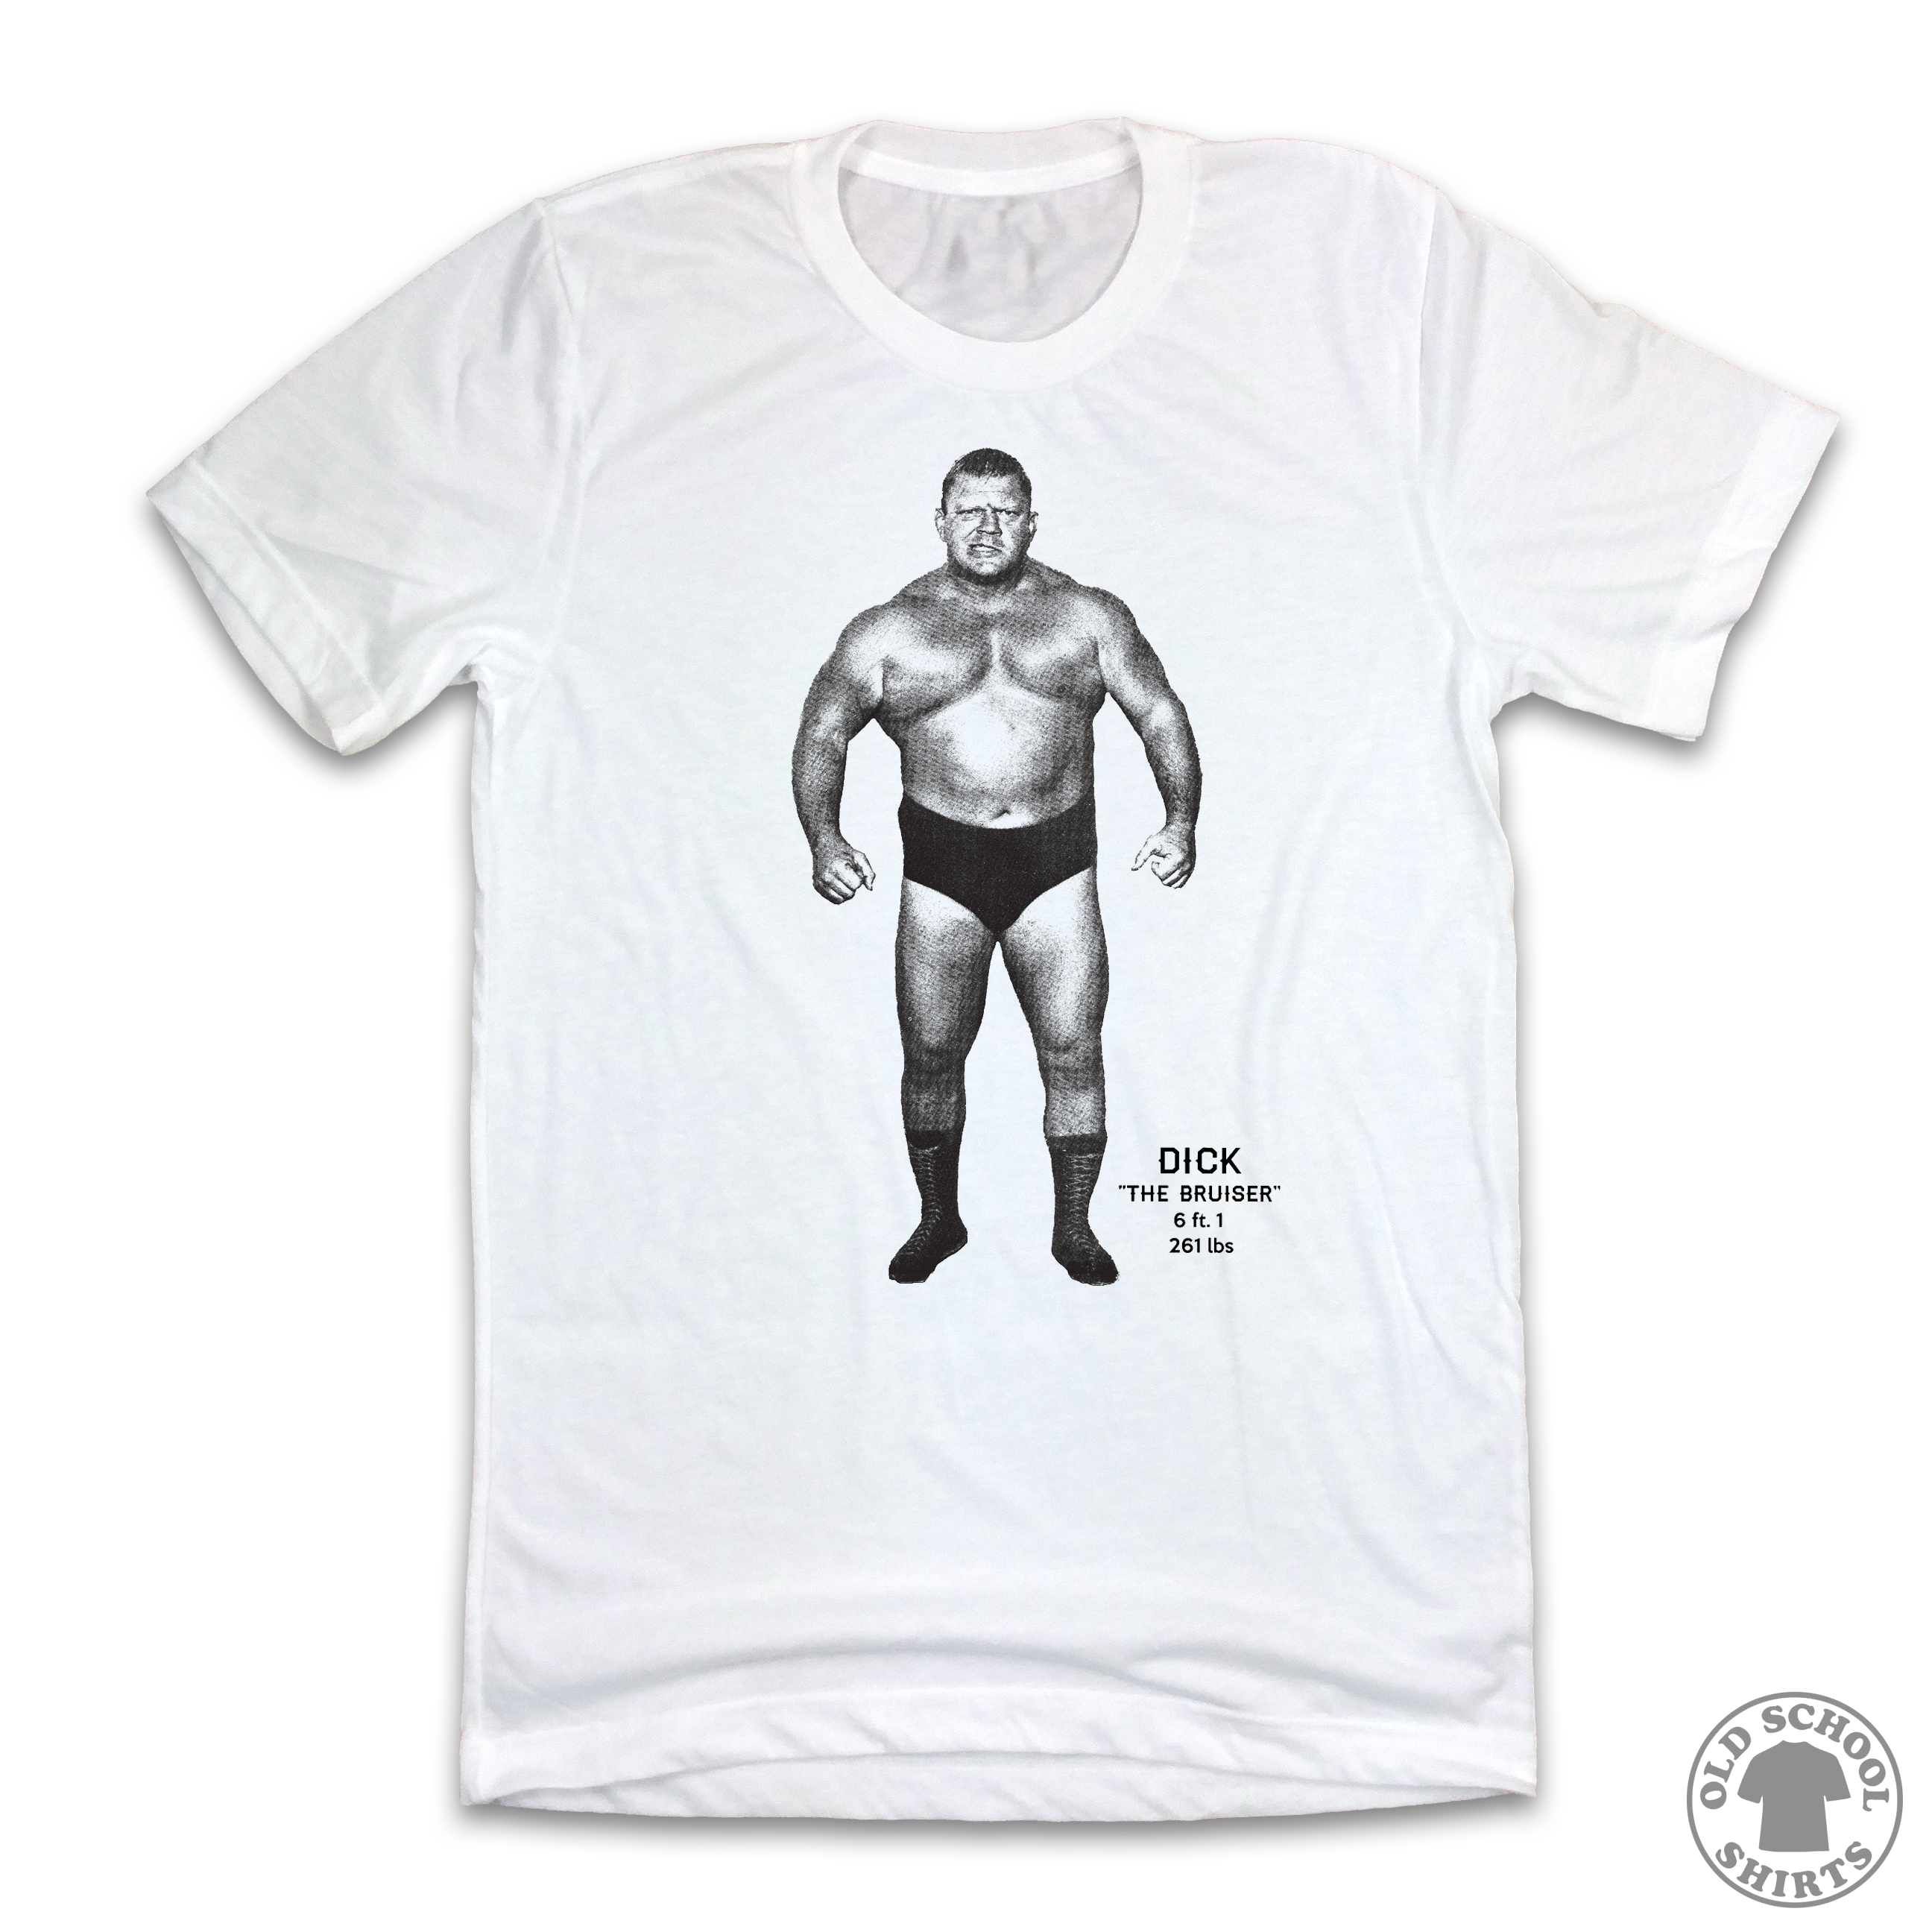 Dick "The Bruiser" - Old School Shirts- Retro Sports T Shirts